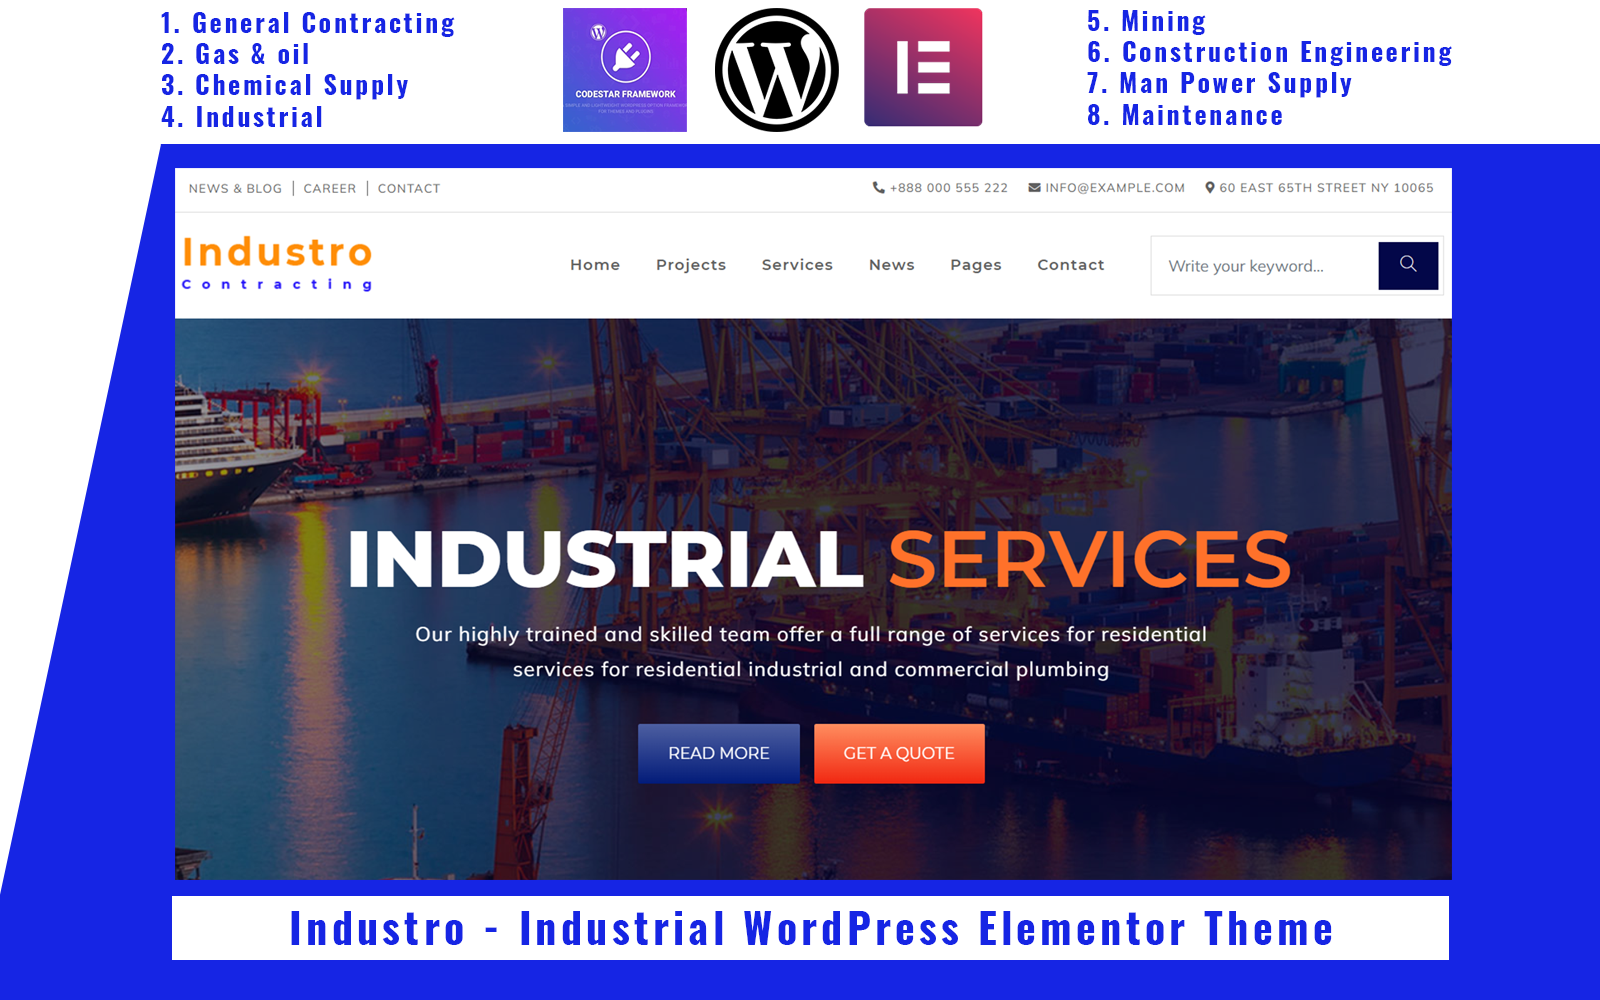 Industro - Industrial WordPress Elementor theme